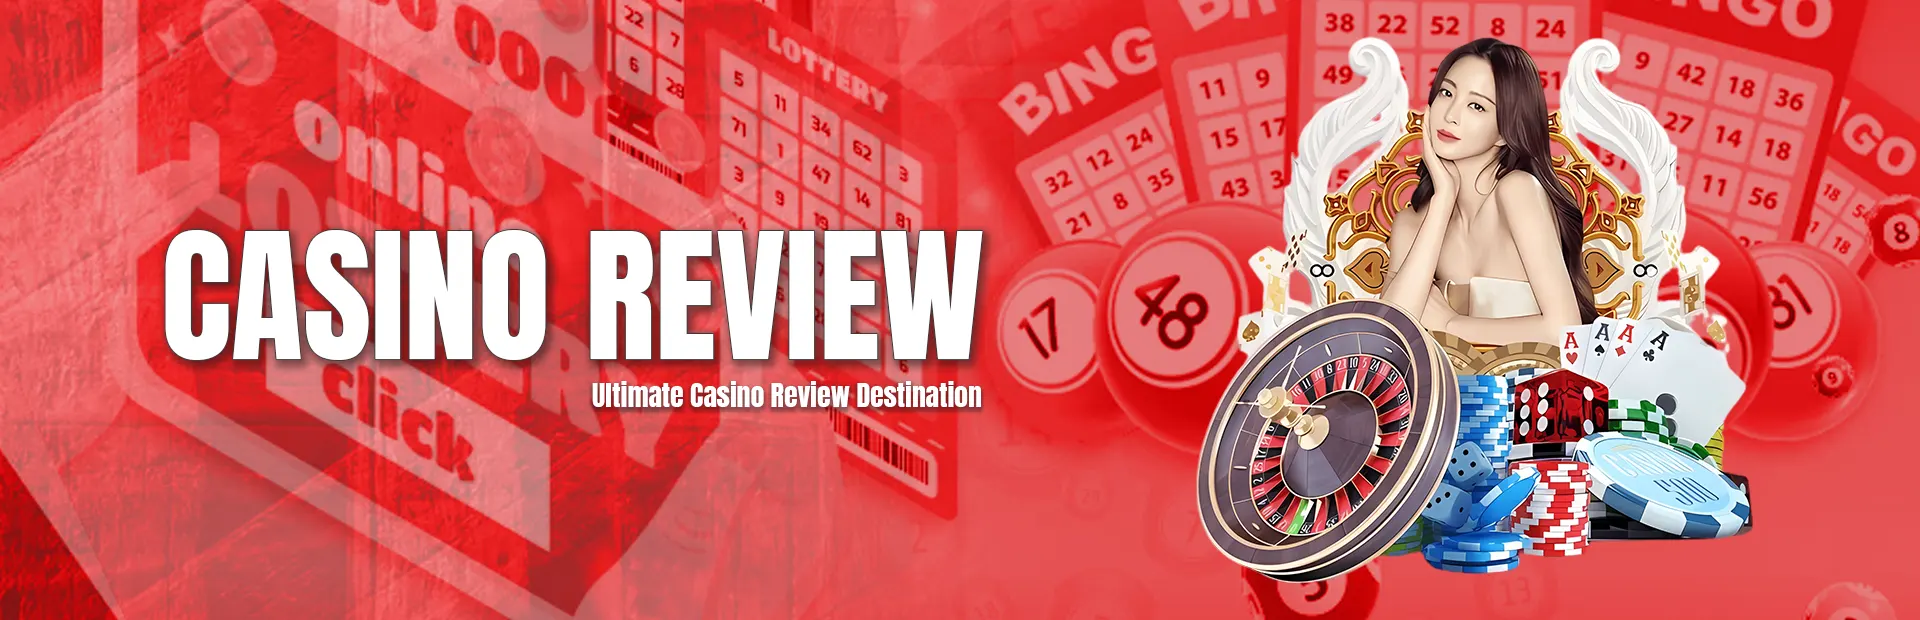 india casino review